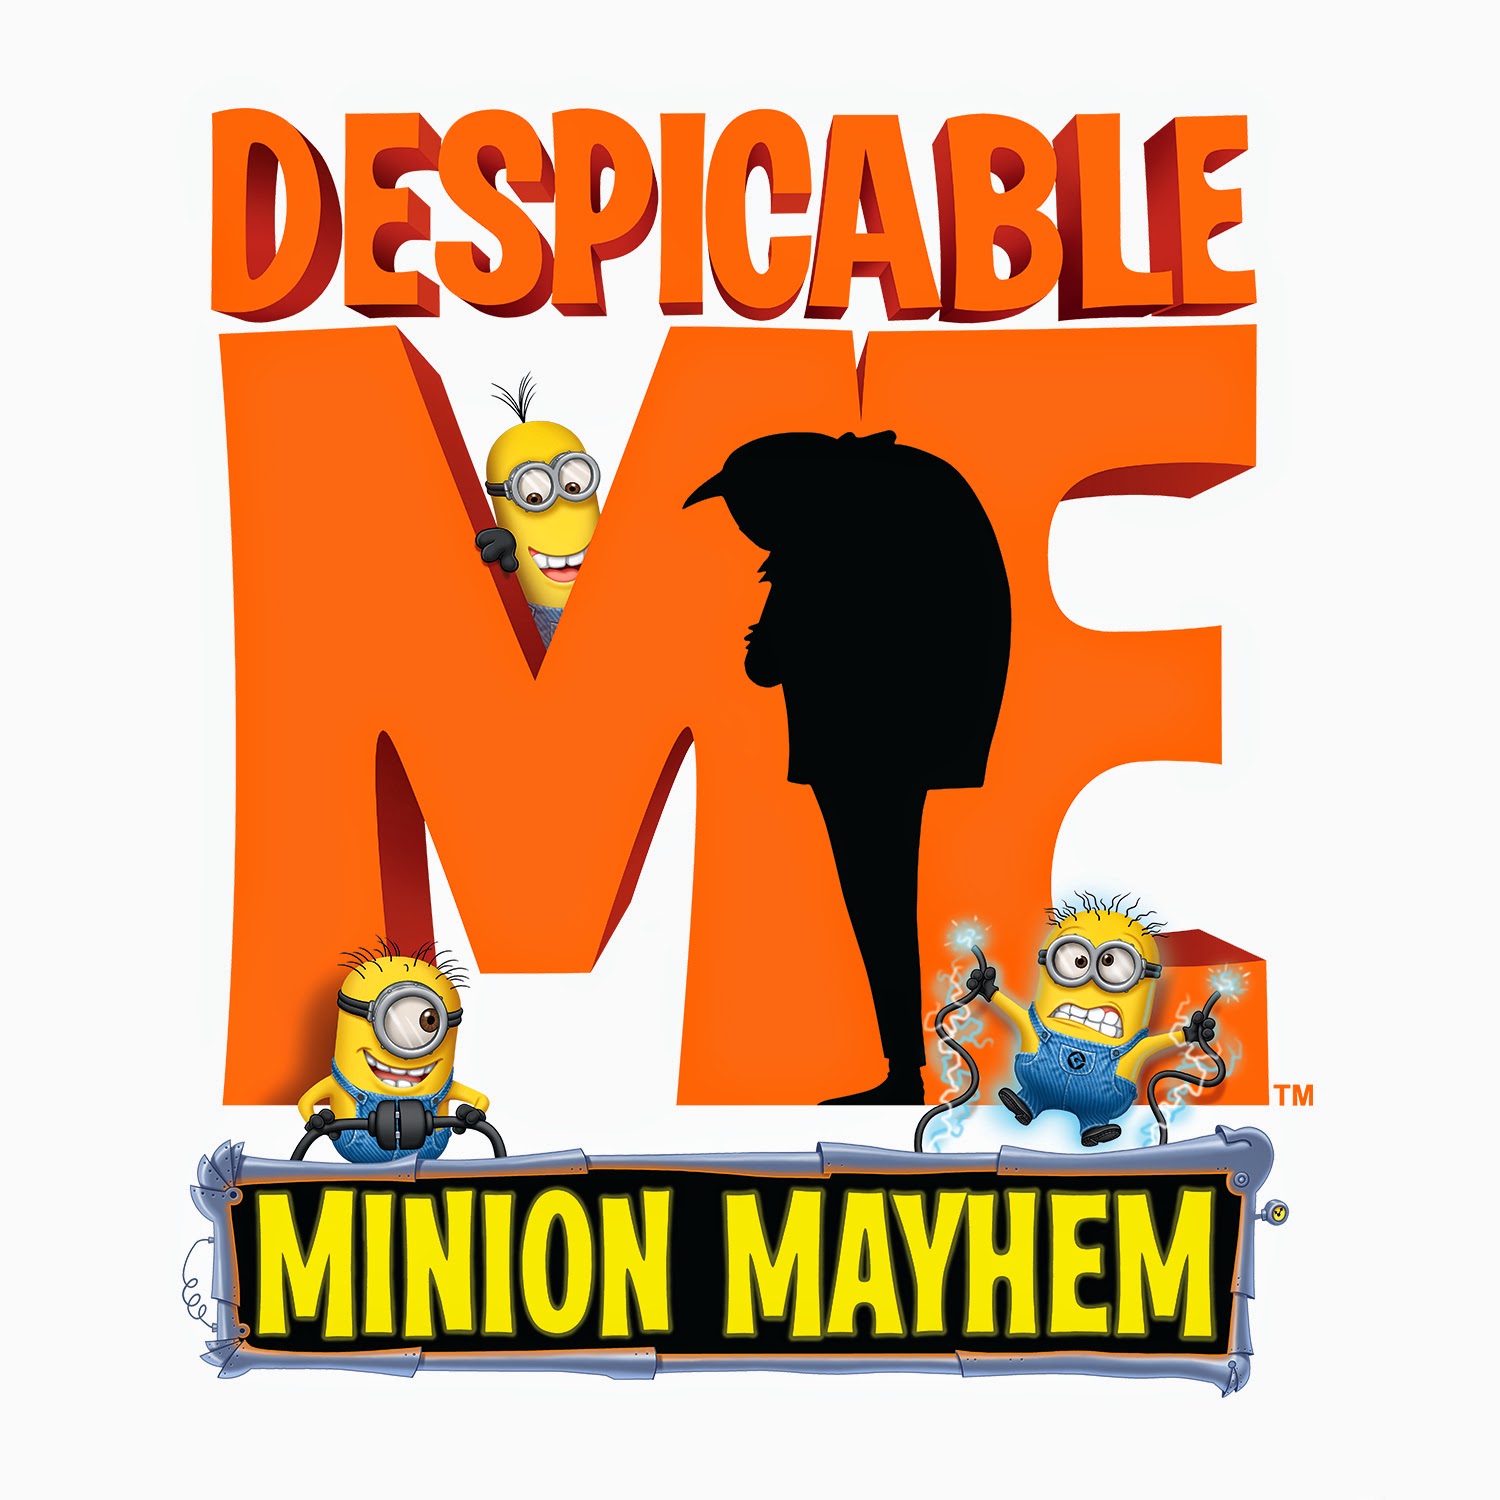 Minion Mayhem Despicable Me animatedfilmreviews.filminspector.com